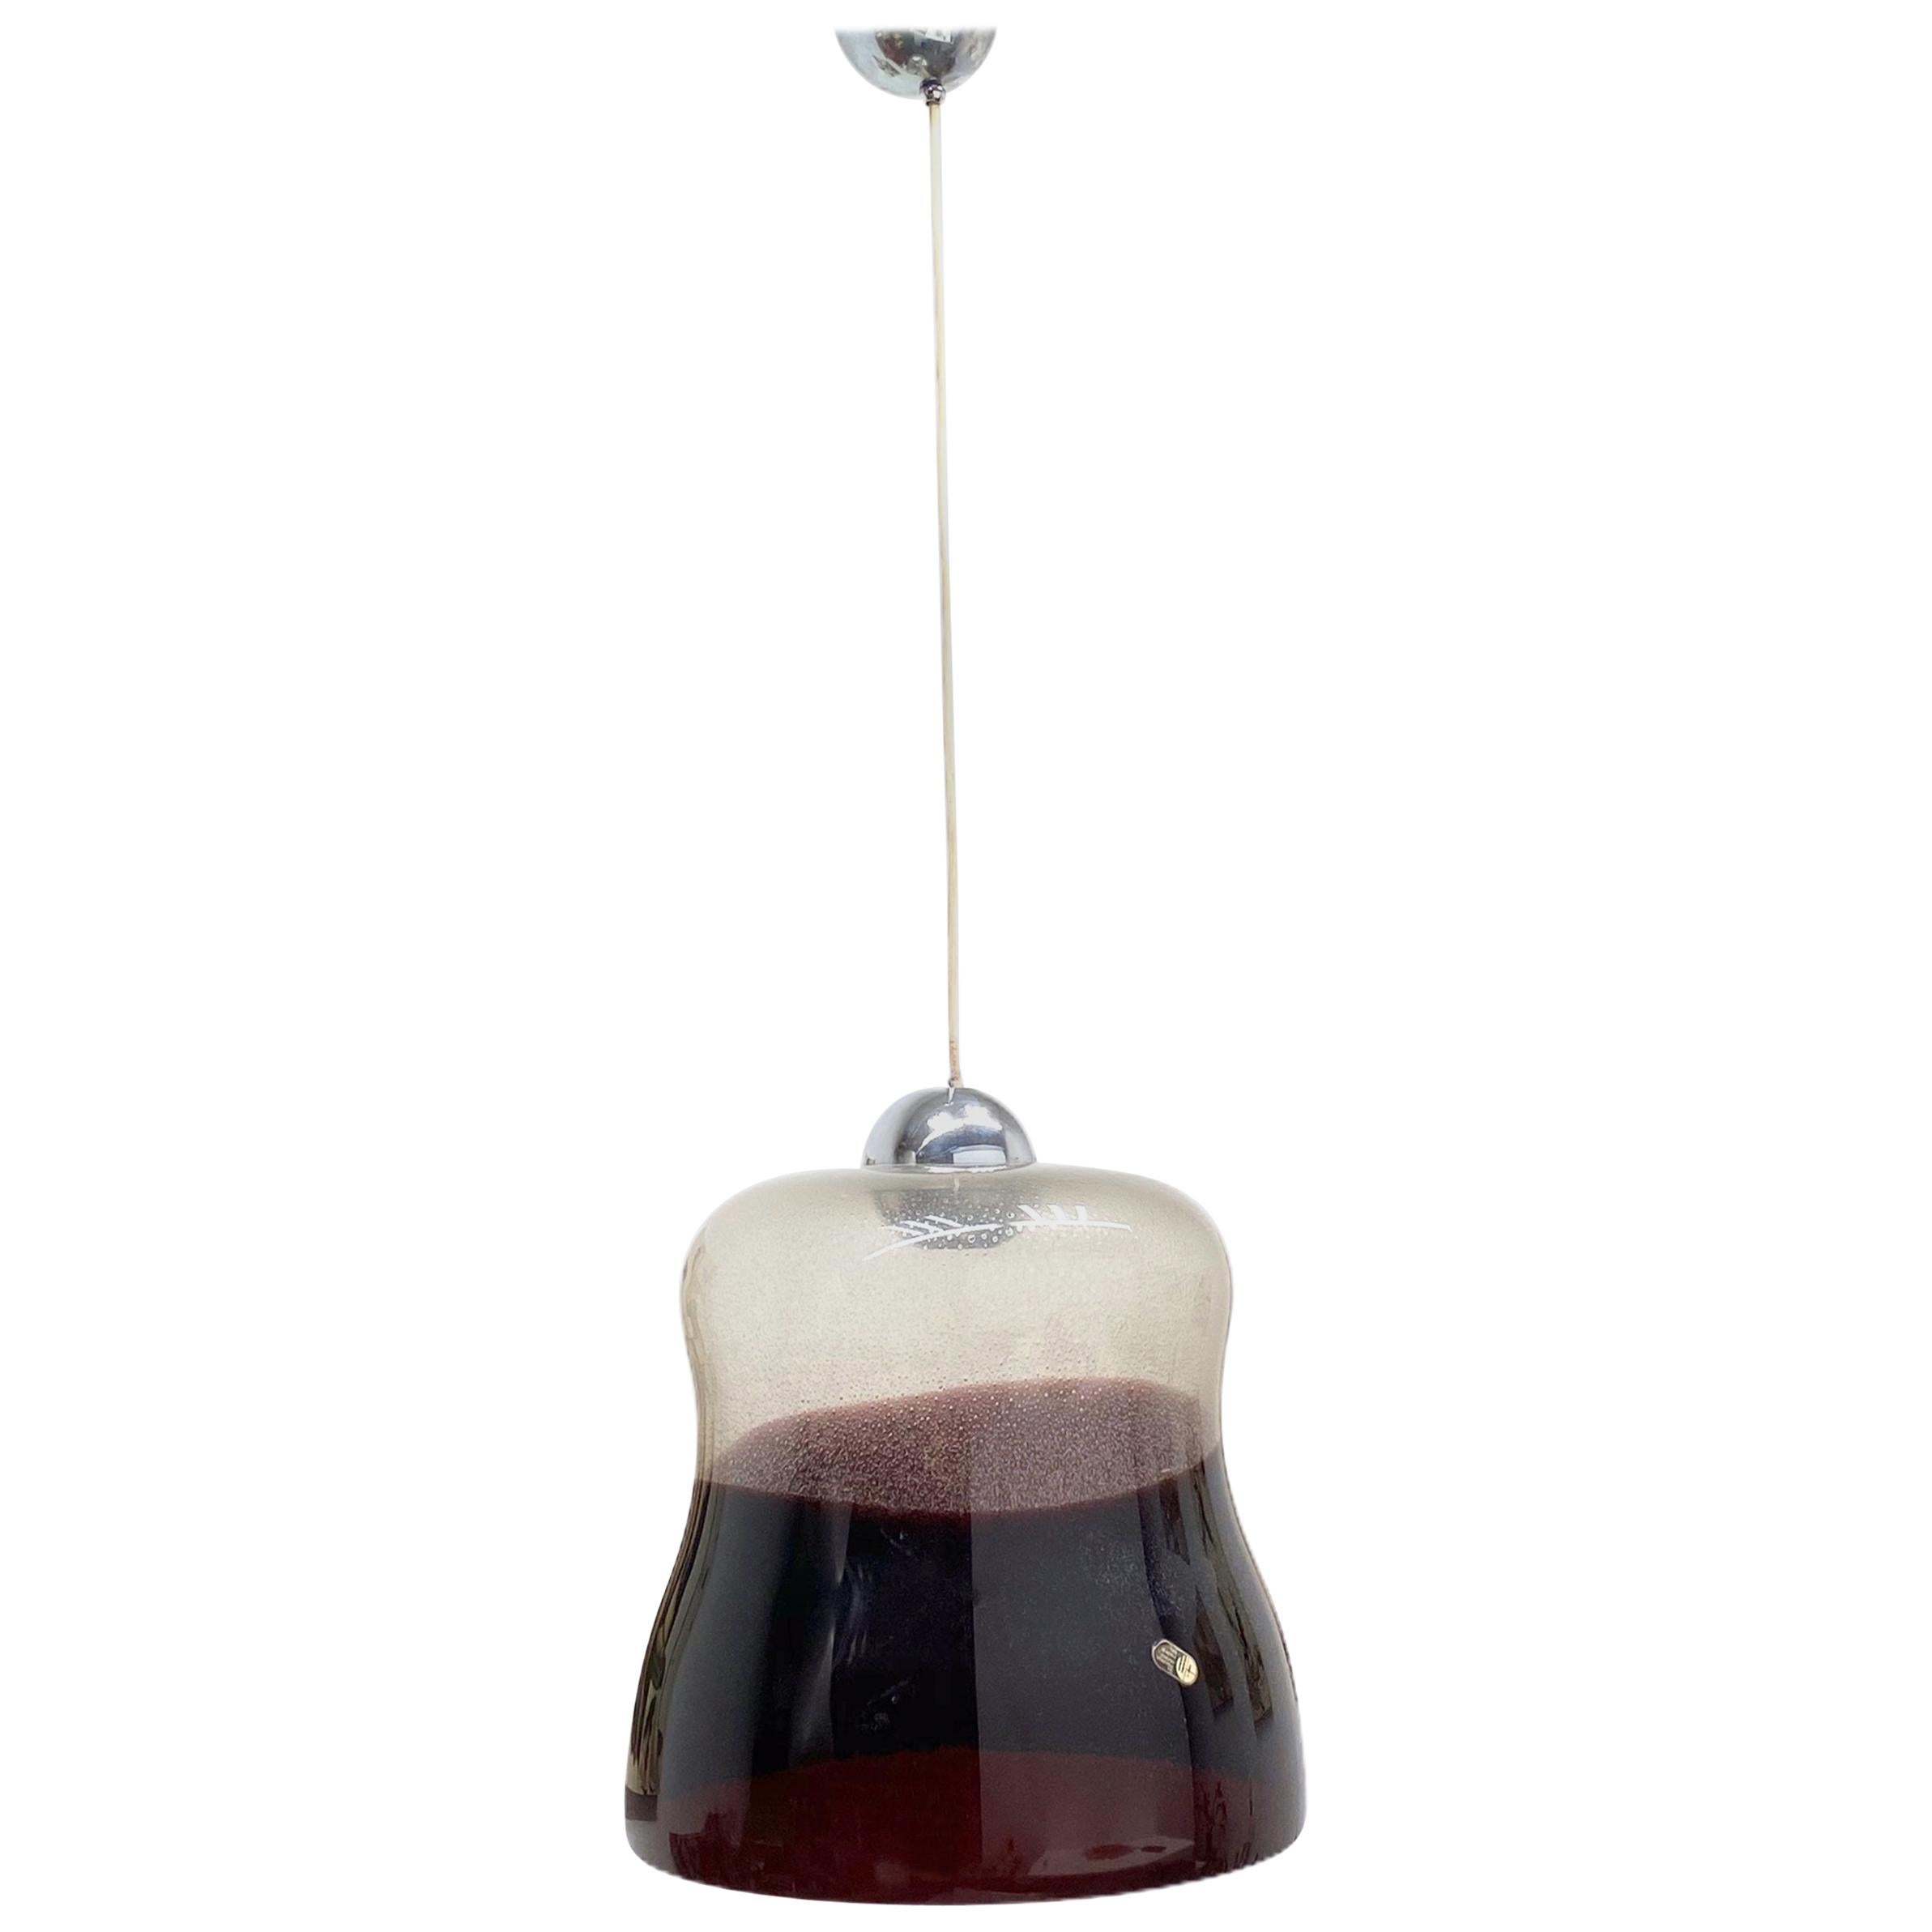 Organic Bell Pendant Light Fixture by Carlo Nason for Mazzega, Italy